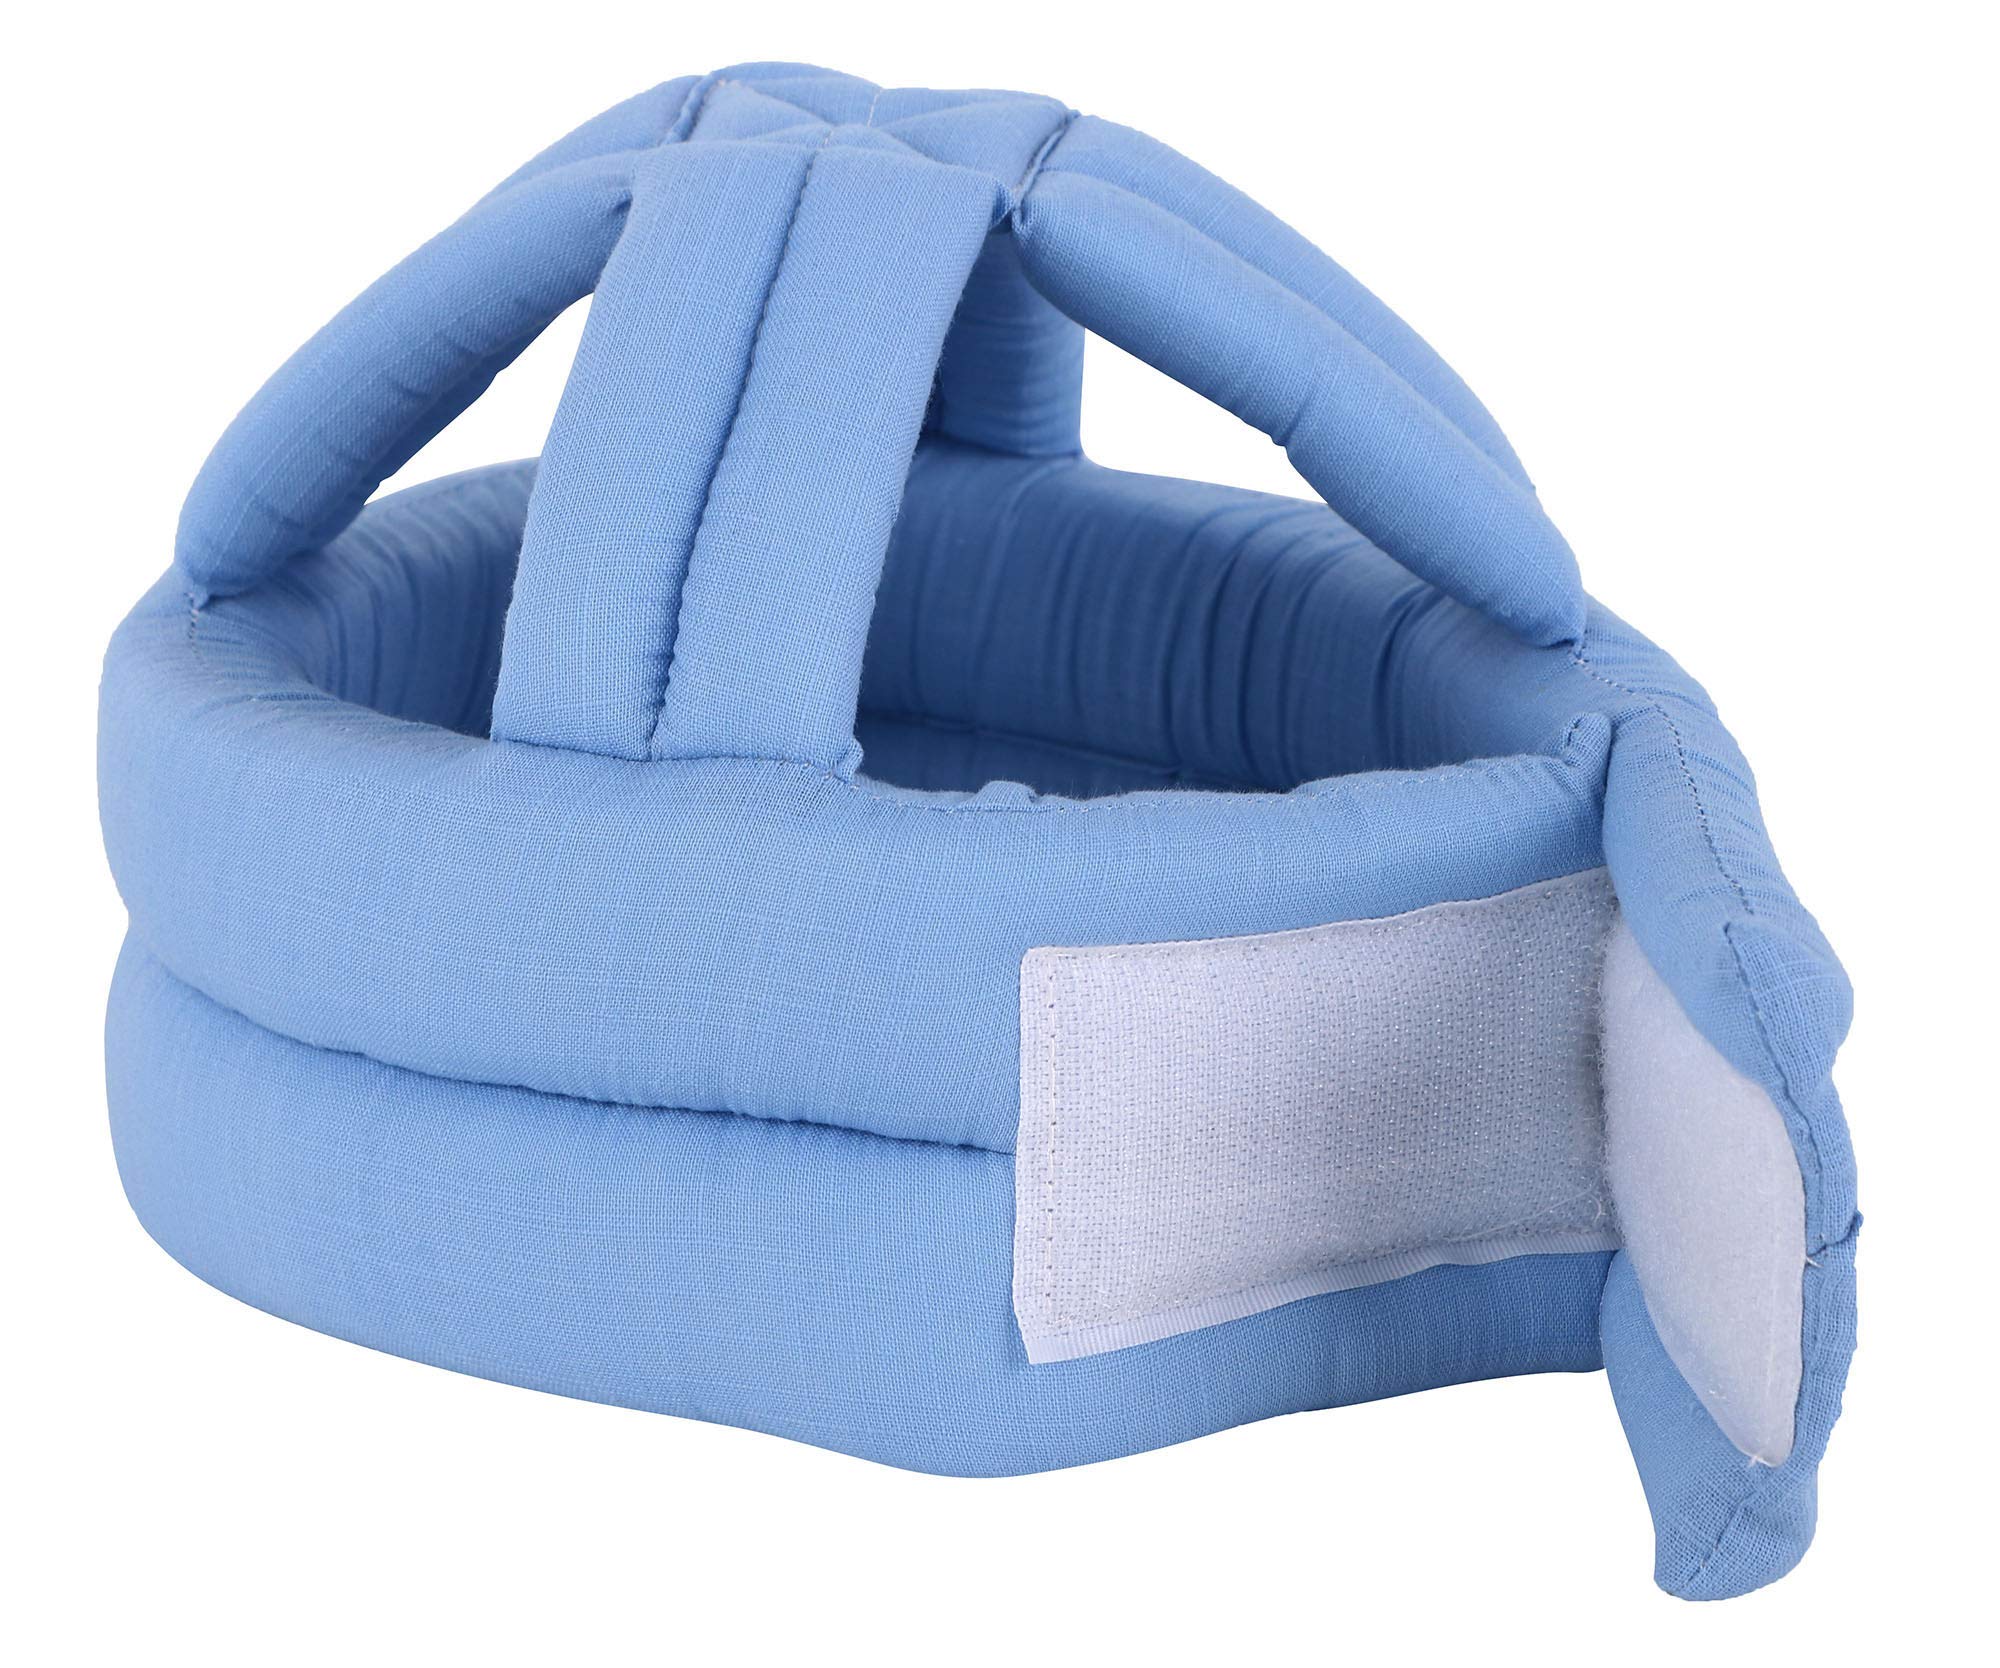 Simplicity Baby Infant Toddler No Bumps Safety Helmet Head Cushion Bumper Bonnet